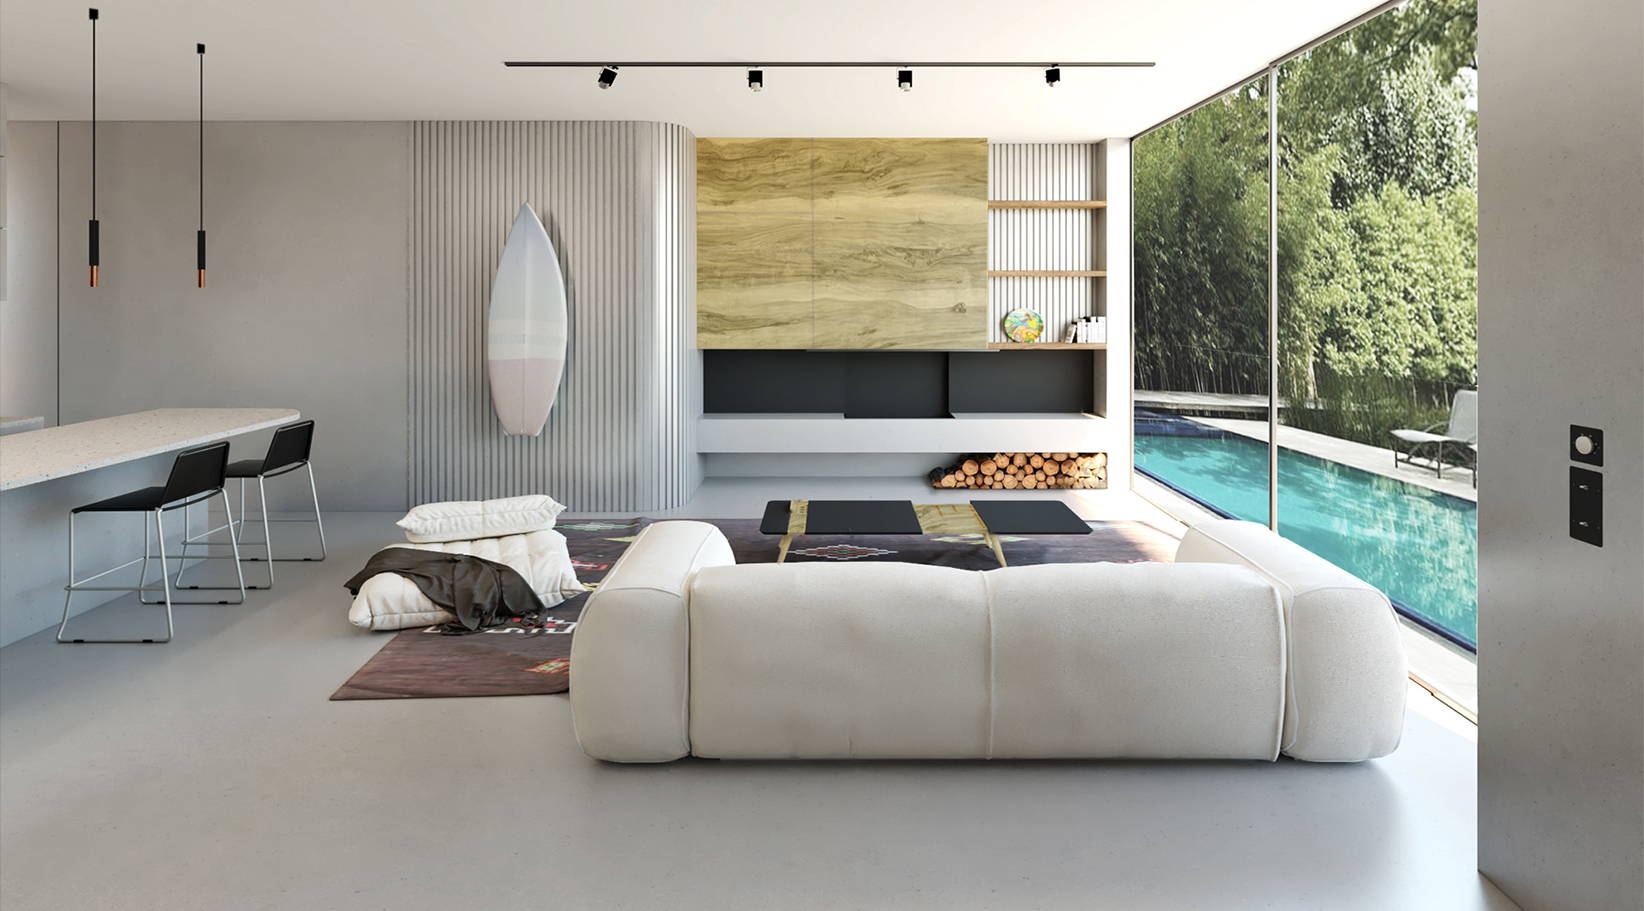 1-interior-design-livingroom-amazing-pool-surf-house-fireplace